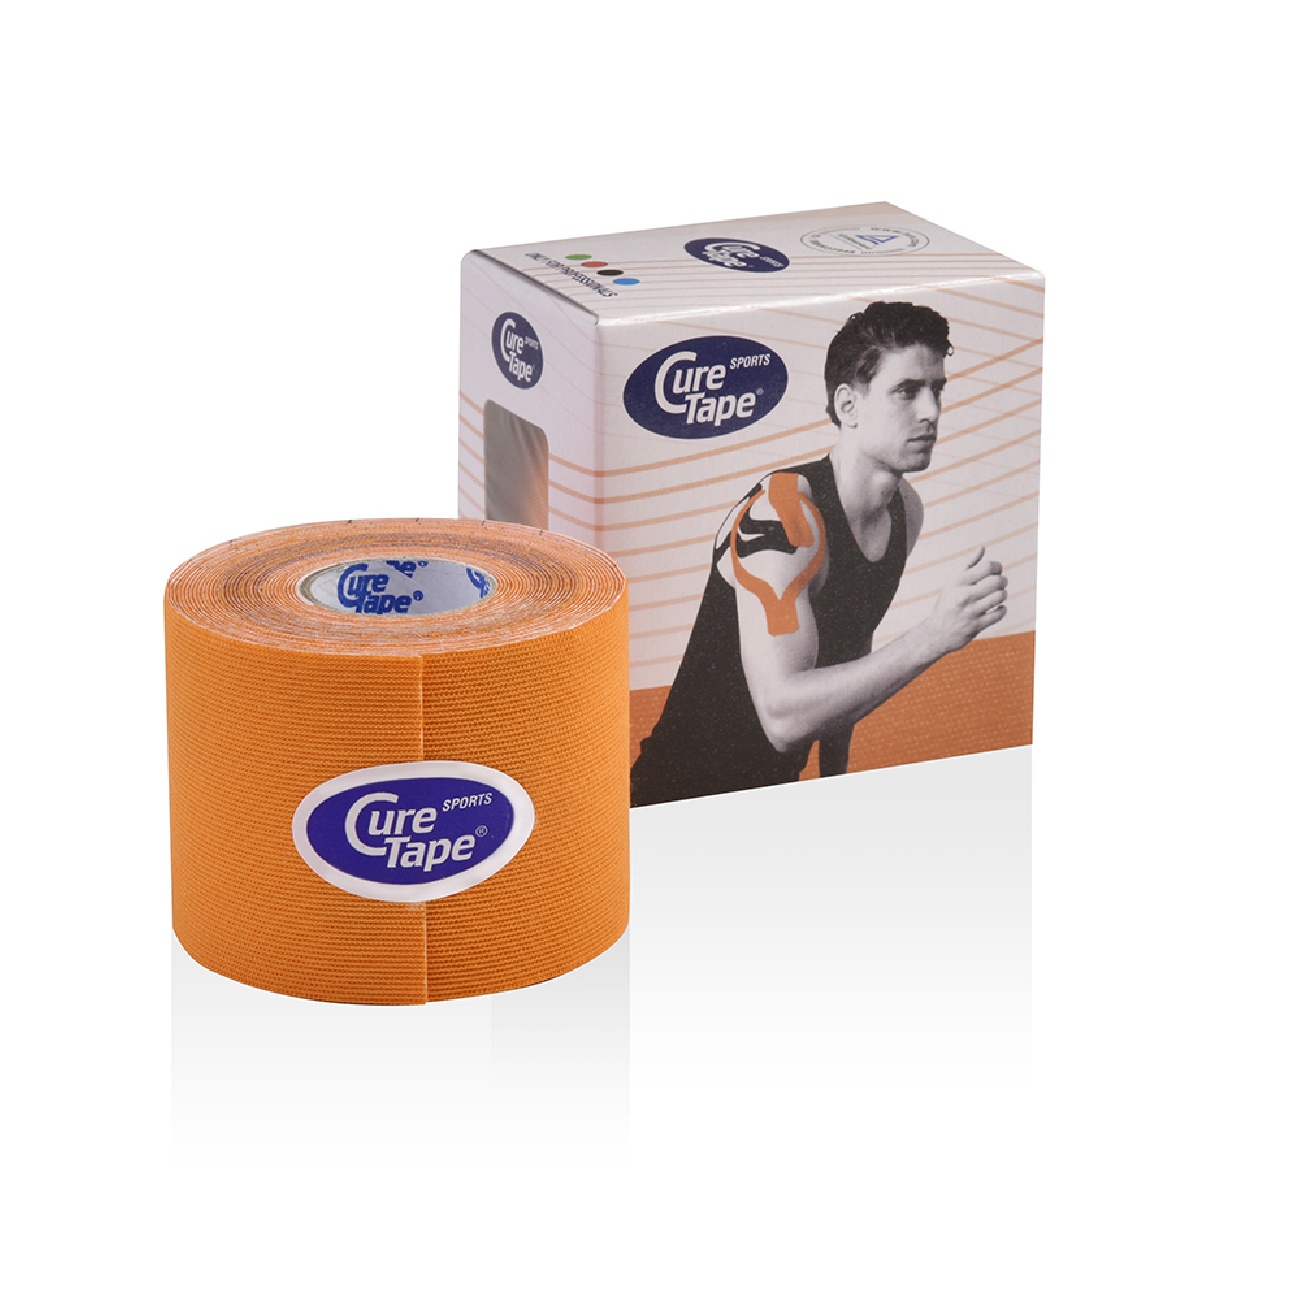 CureTape Sports Single Roll and Box - Orange